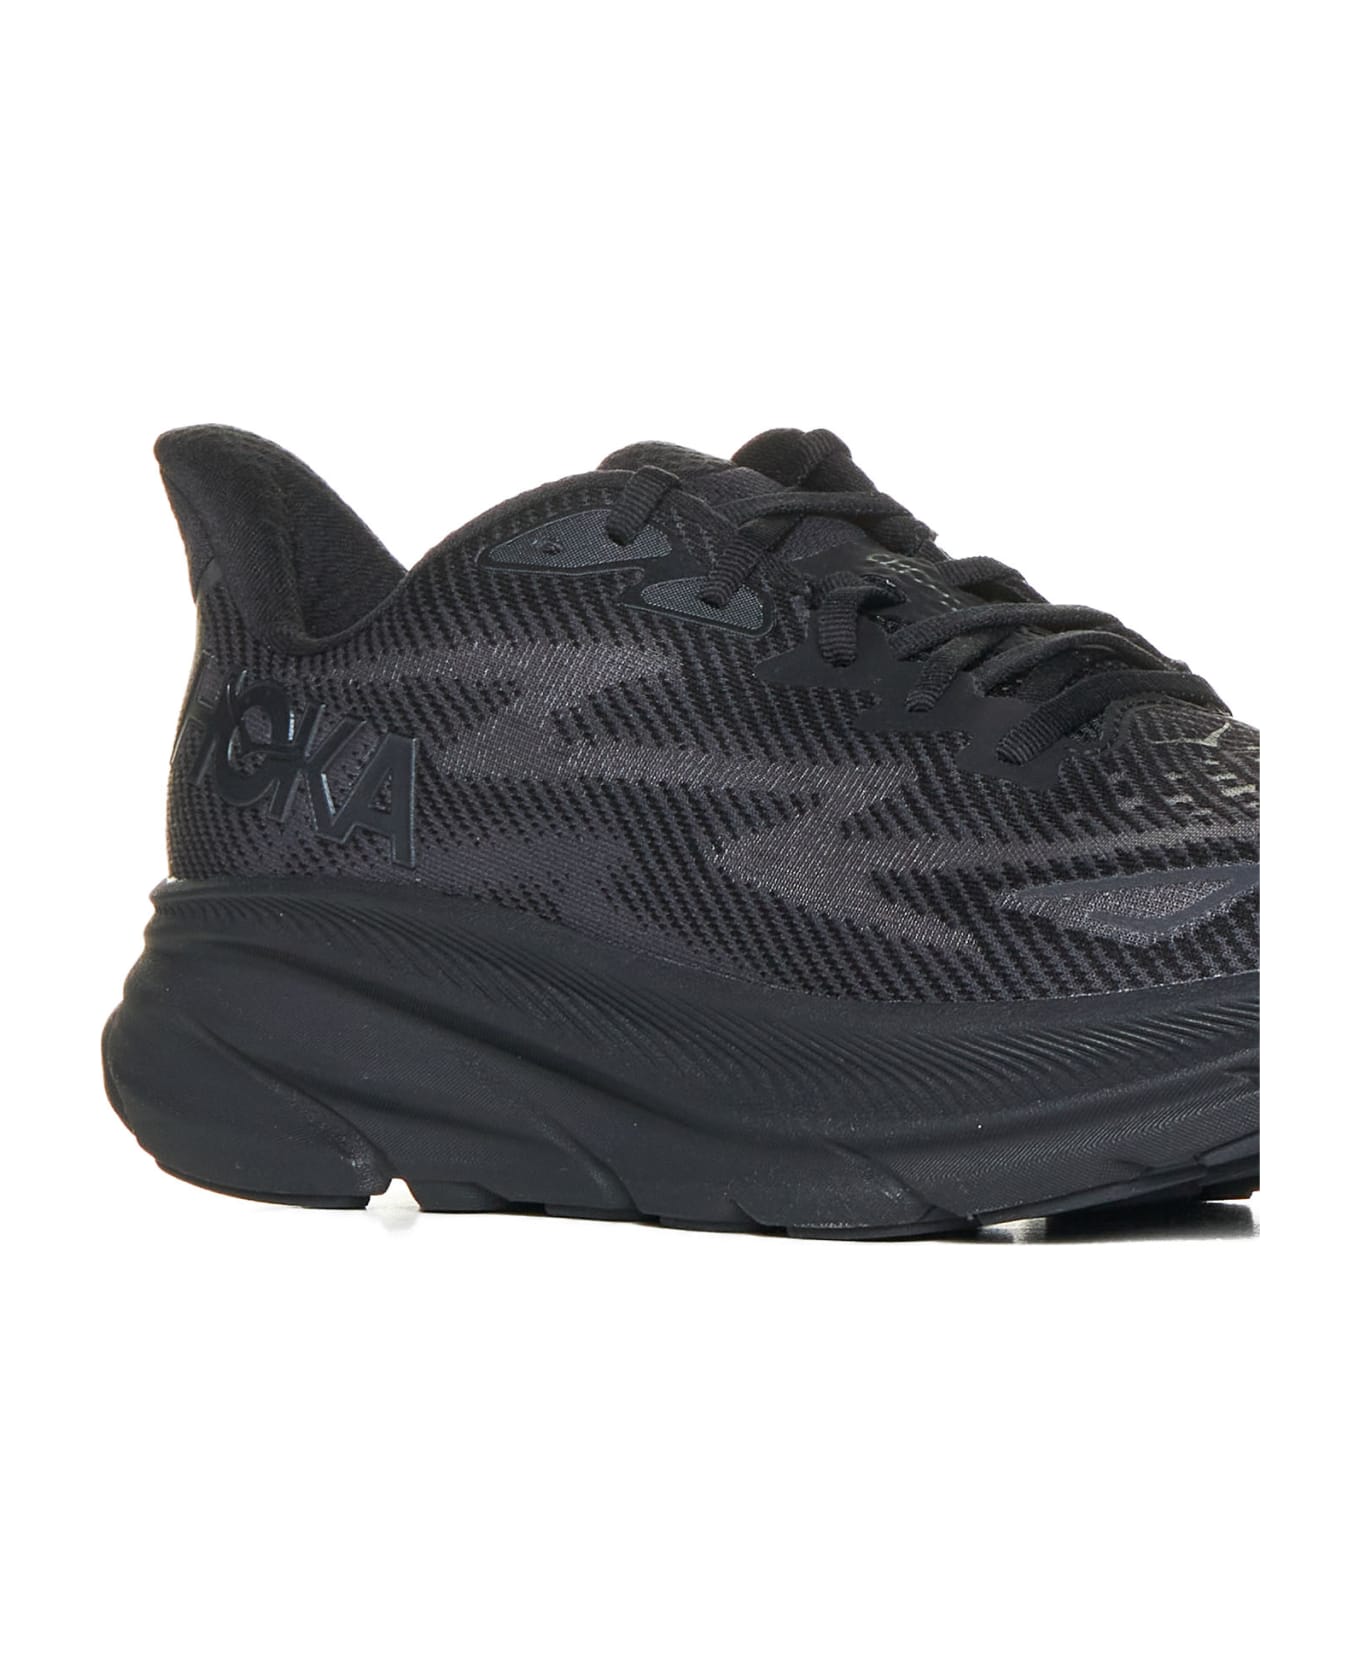 Hoka Sneakers - Black black スニーカー